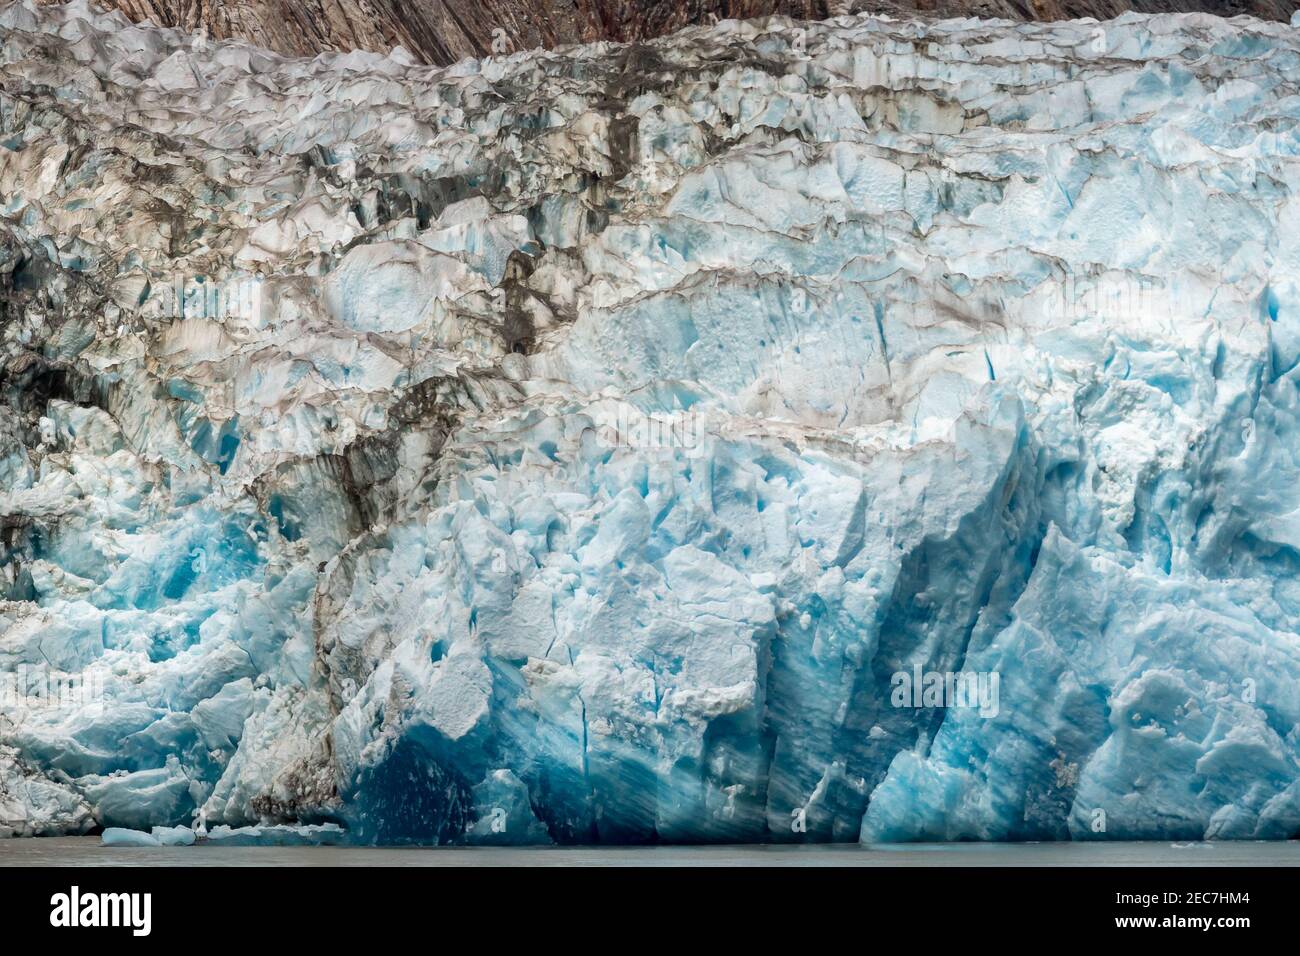 Tracy Arm Fjord with Sawyer Glacier in Southeast Alaska Stock Photo